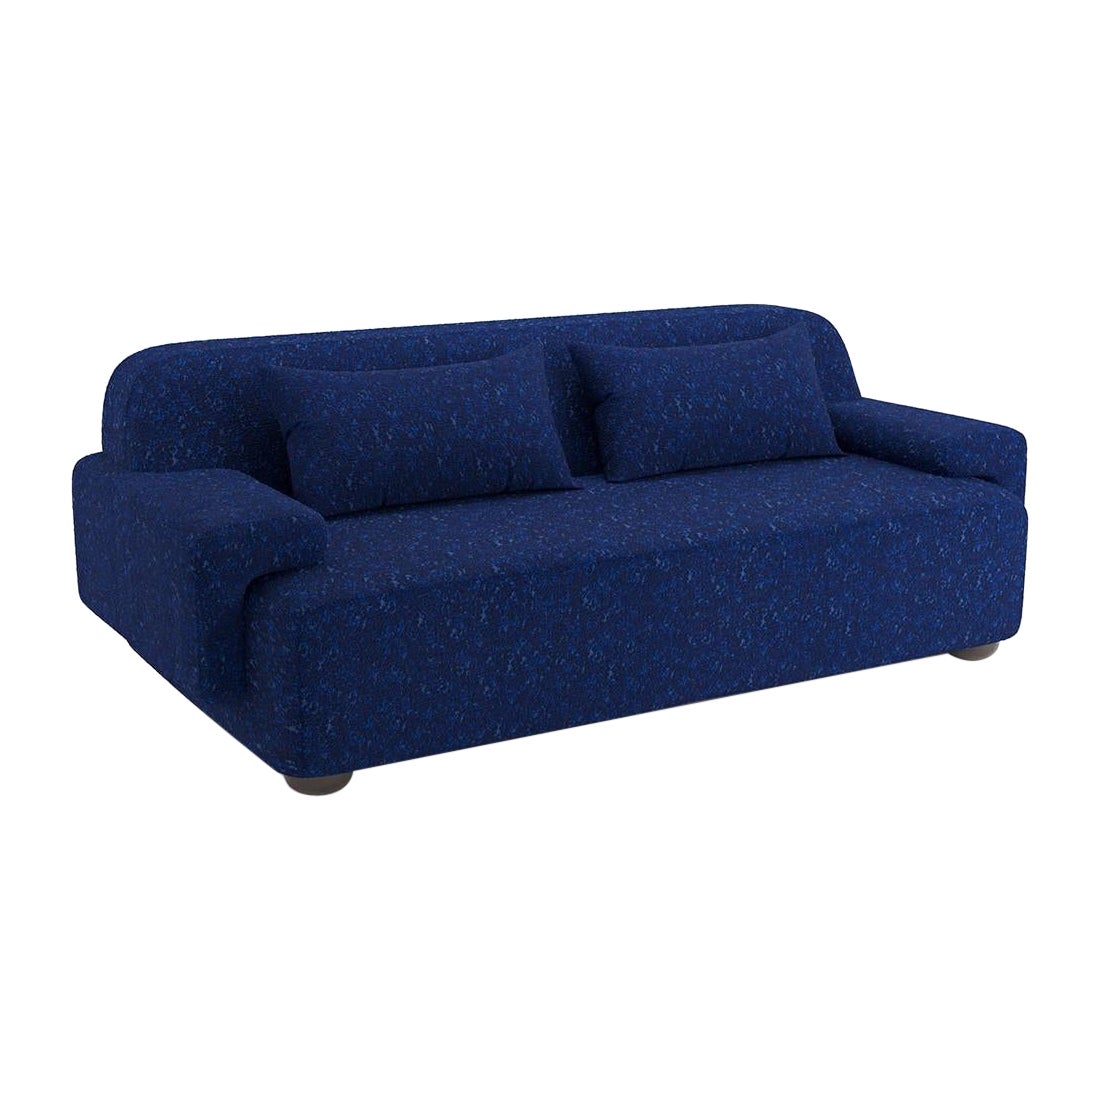 Popus Editions Lena 2.5 Seater Sofa in Marina Venice Chenille Velvet Upholstery